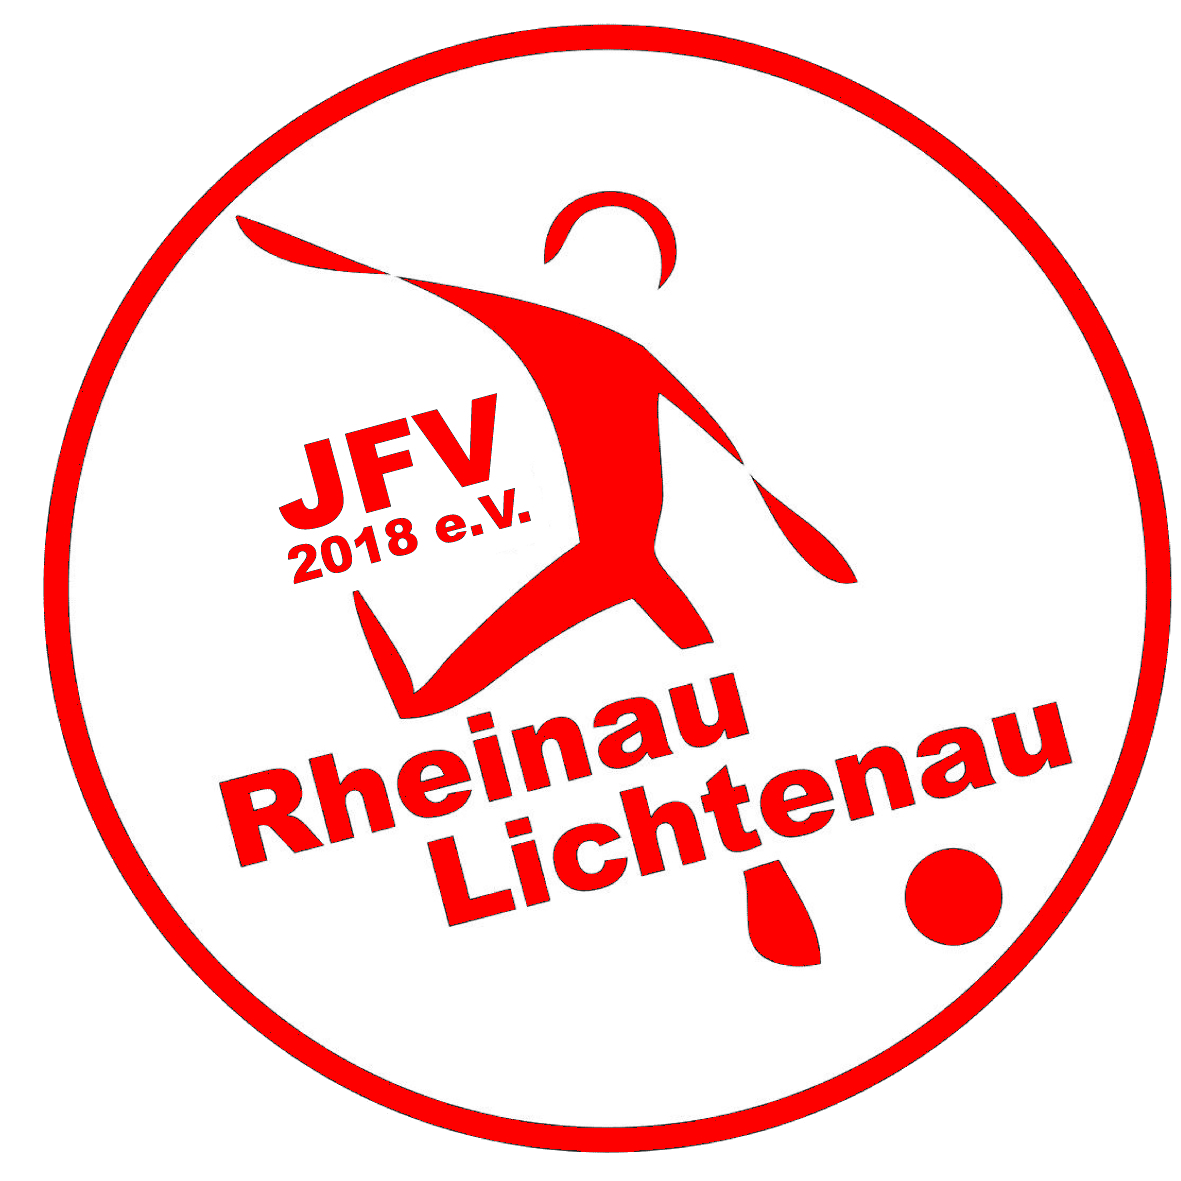 JFV Rheinau Lichtenau Logo